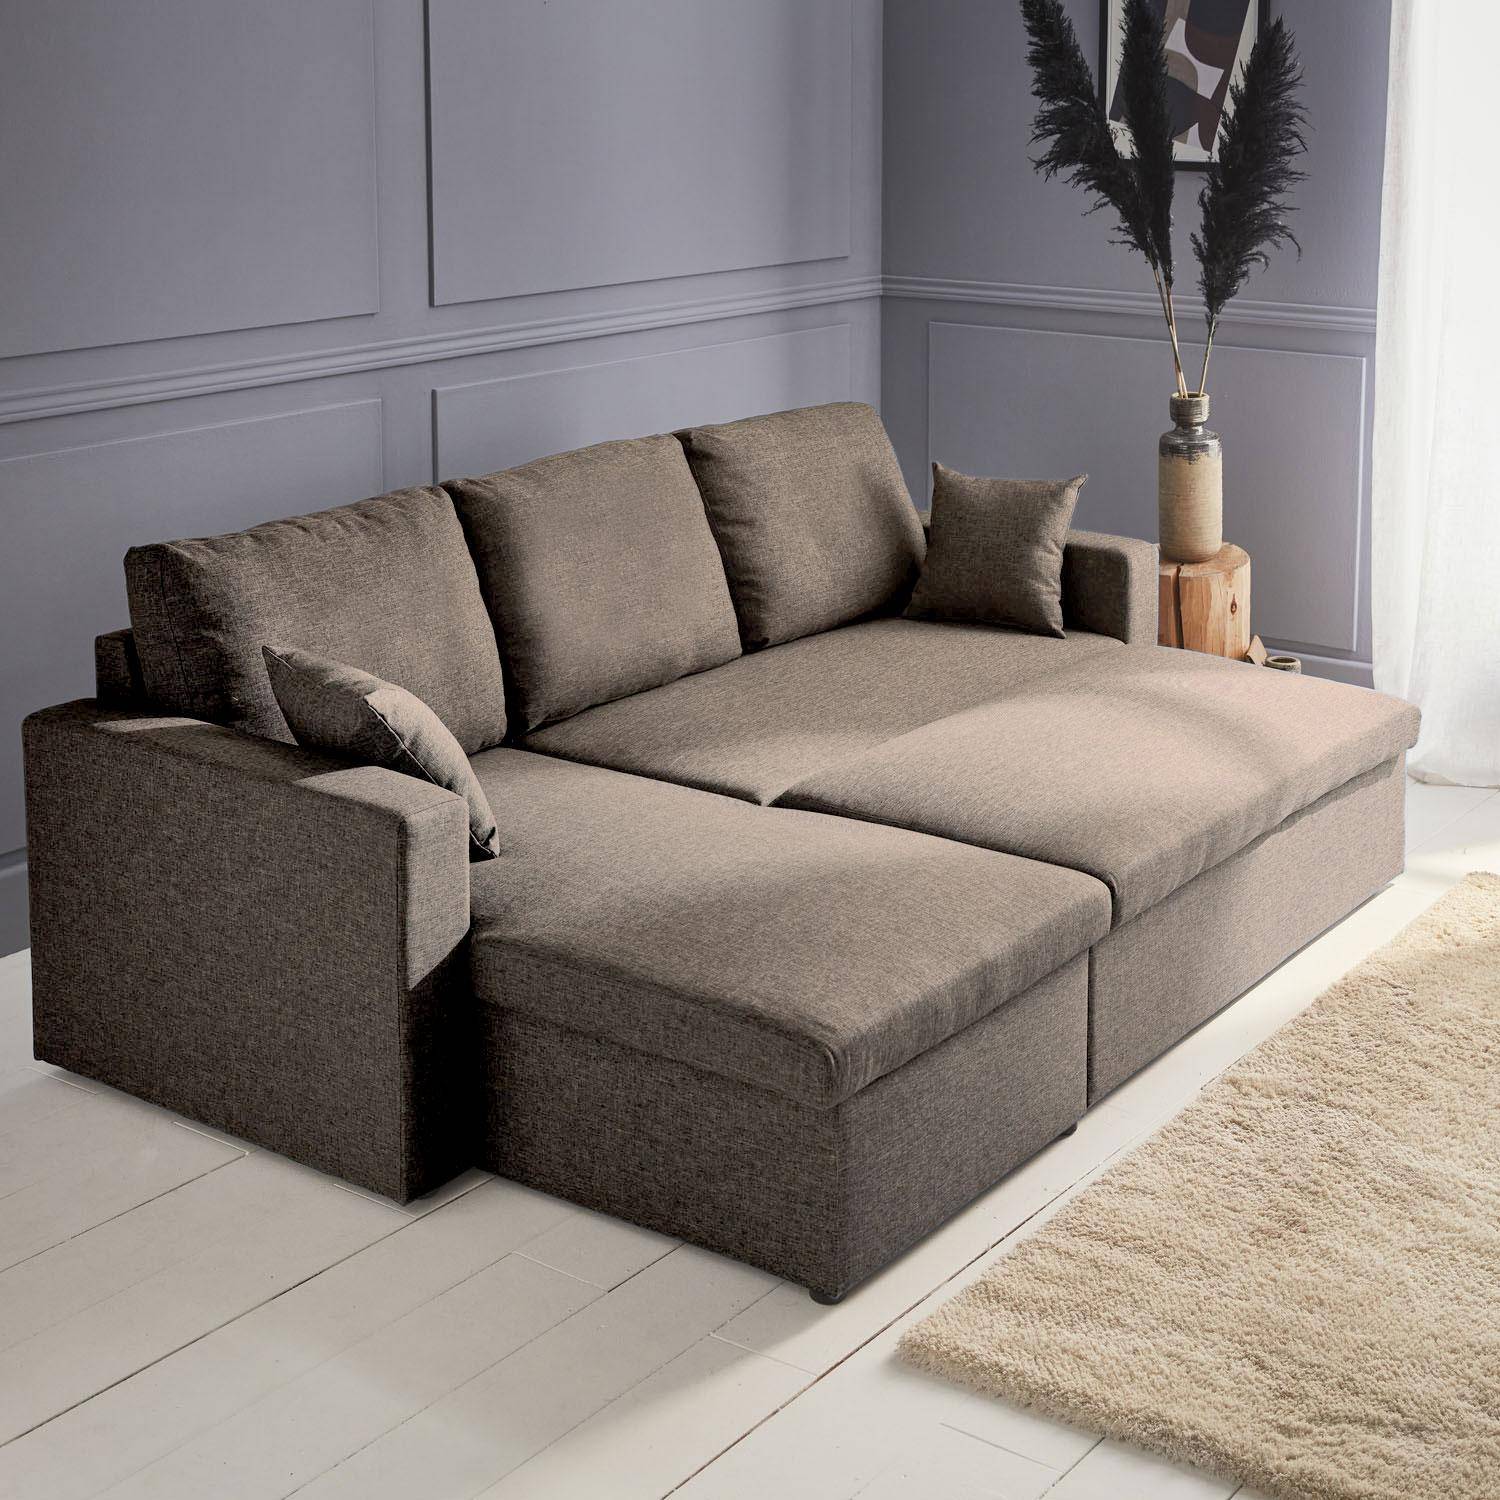 3-seater reversible brown corner sofa bed with storage box, brown, L219xD81xH68cm, IDA,sweeek,Photo2